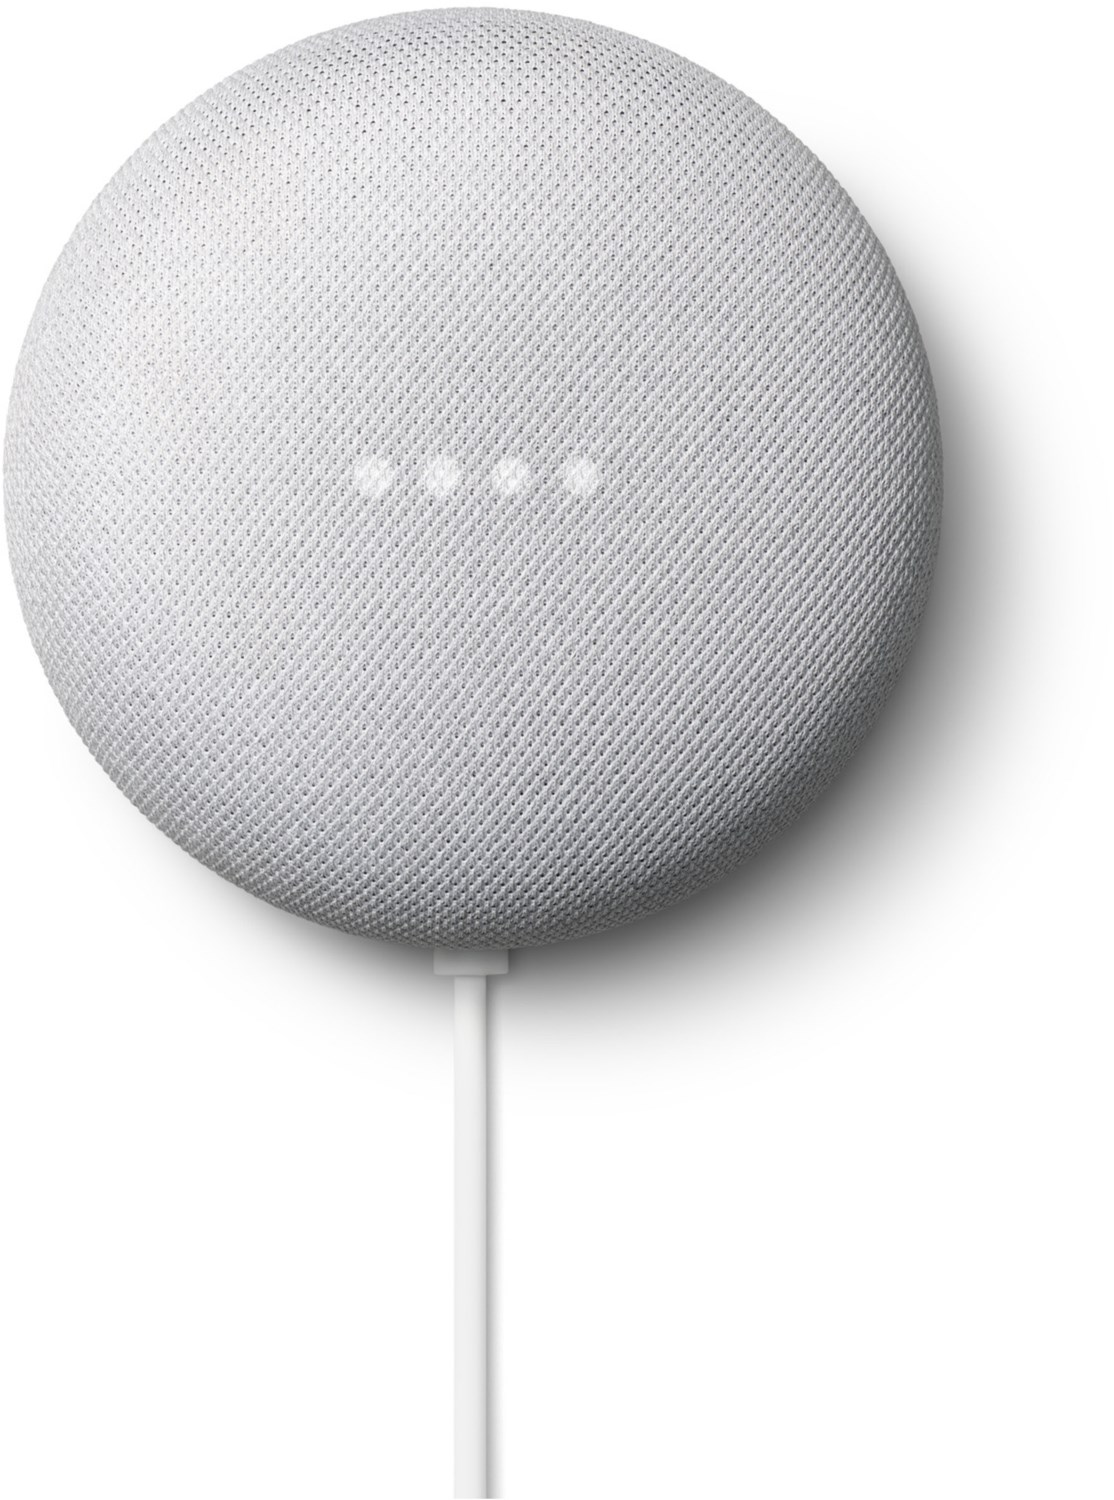 Nest Mini Smart Speaker kreide von Google